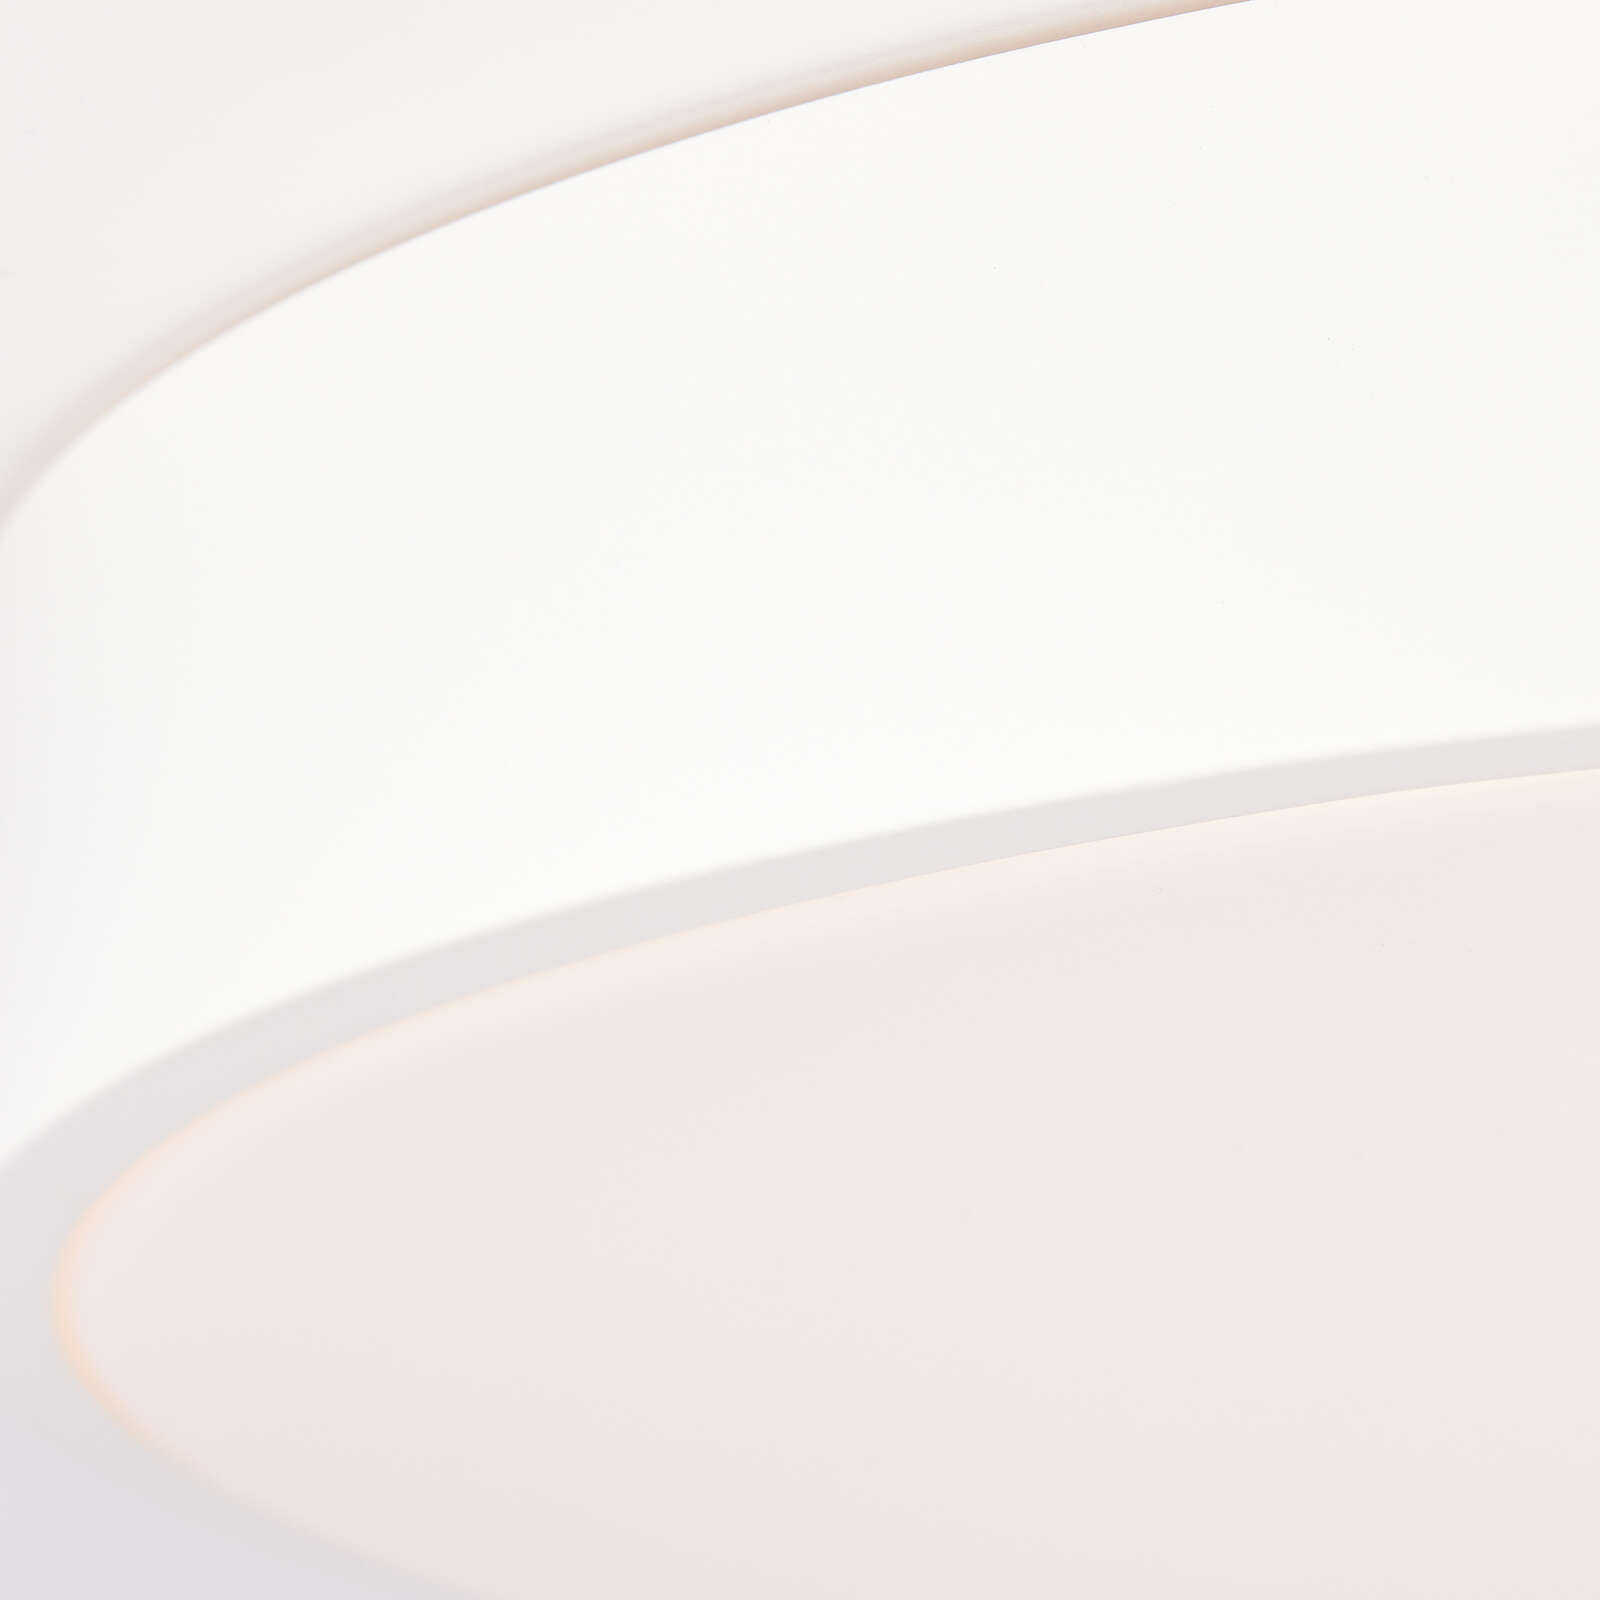             Plastic wall and ceiling light - Niklas 7 - White
        